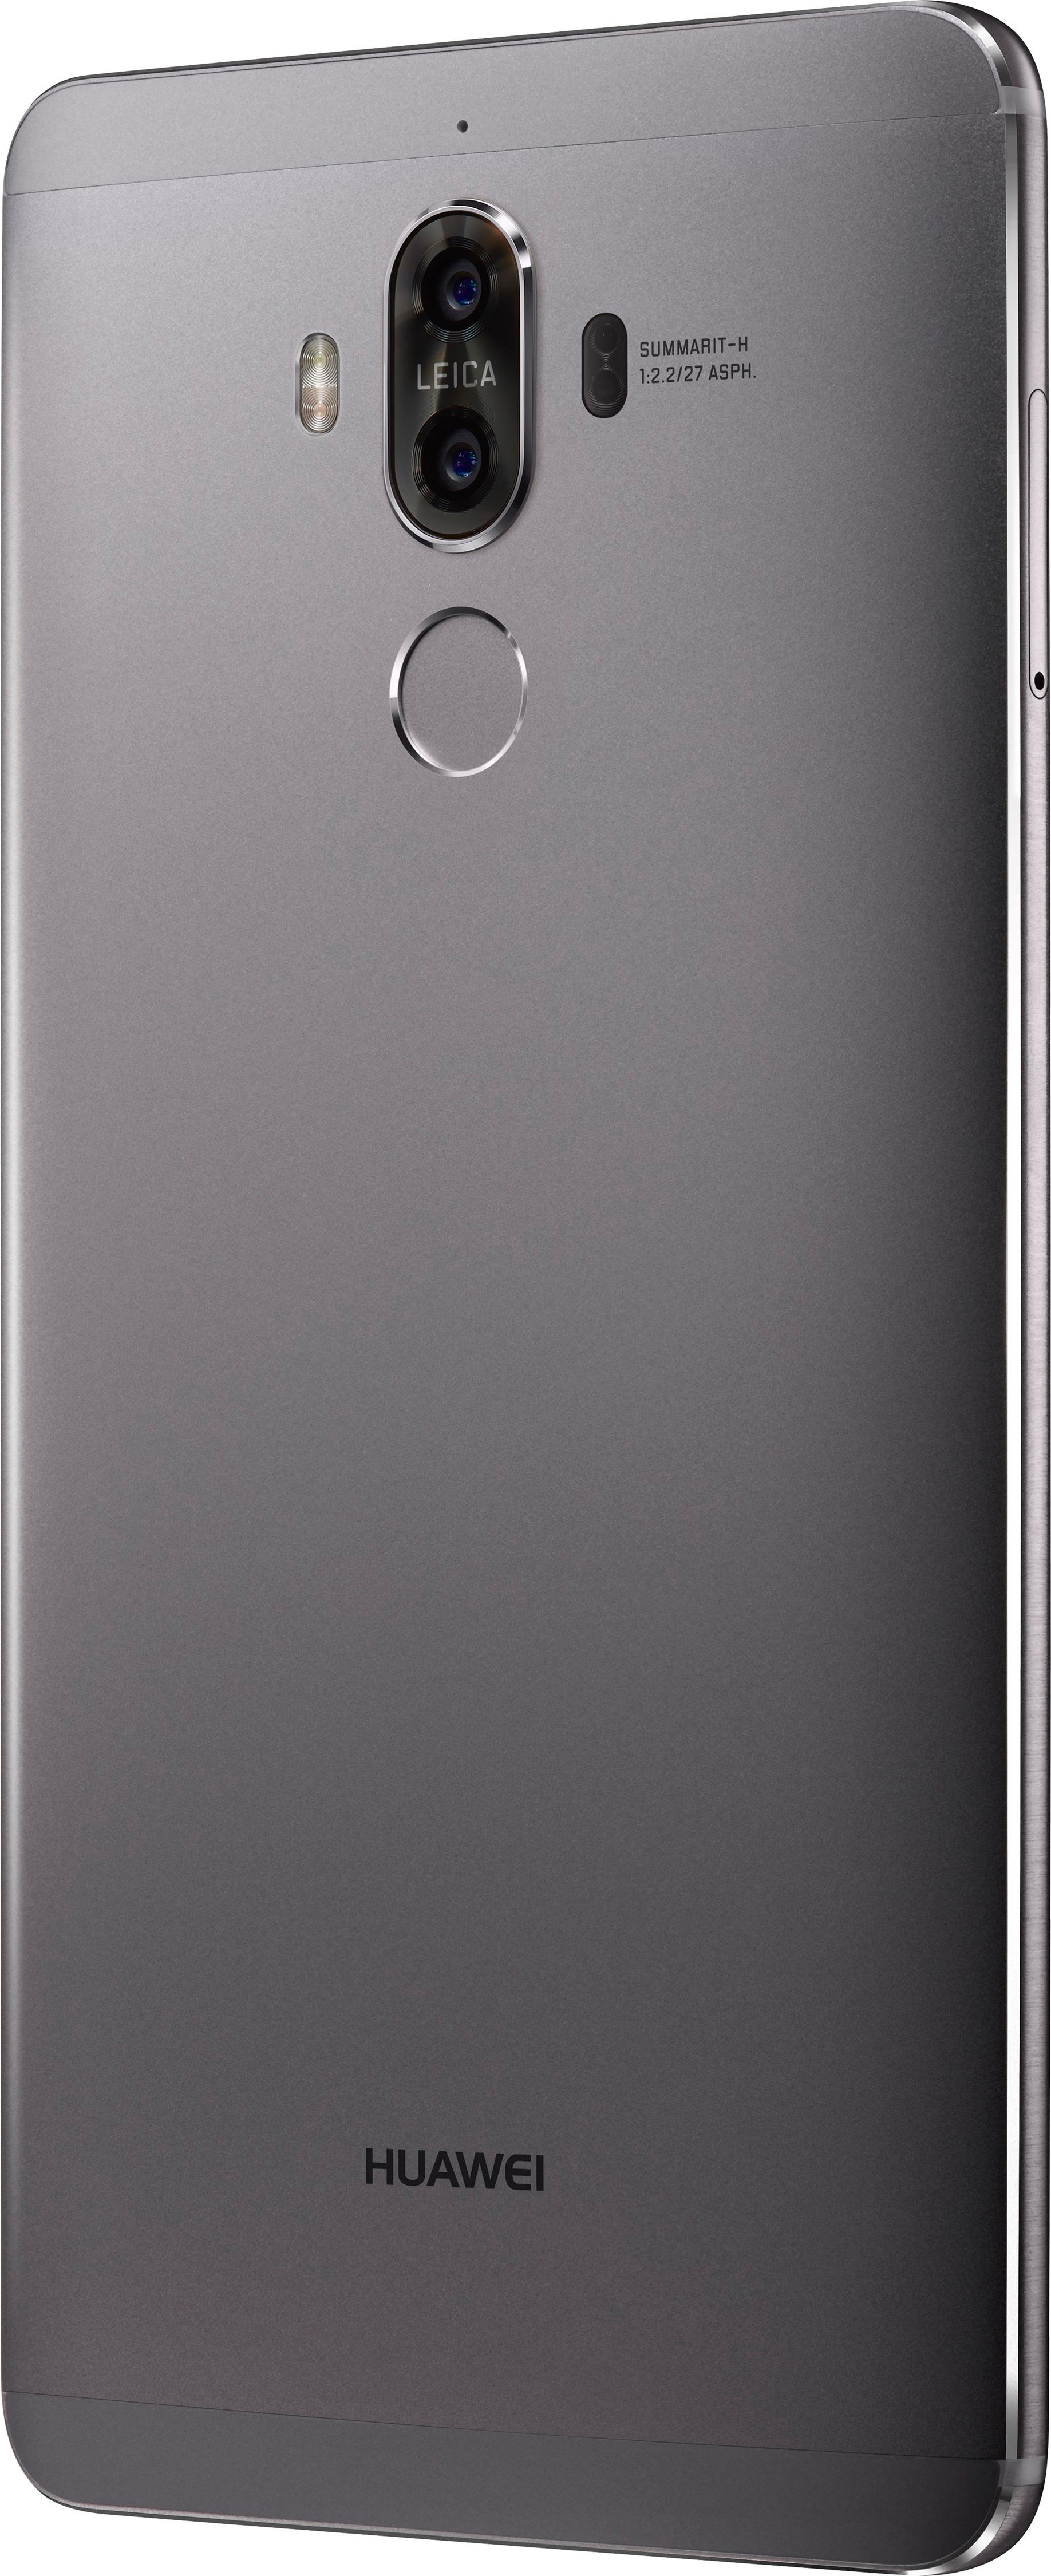 Rang werkplaats neef Best Buy: Huawei Refurbished Mate 9 4G LTE with 64GB Memory Cell Phone  (Unlocked) Space Gray RFRB-MHA-L29